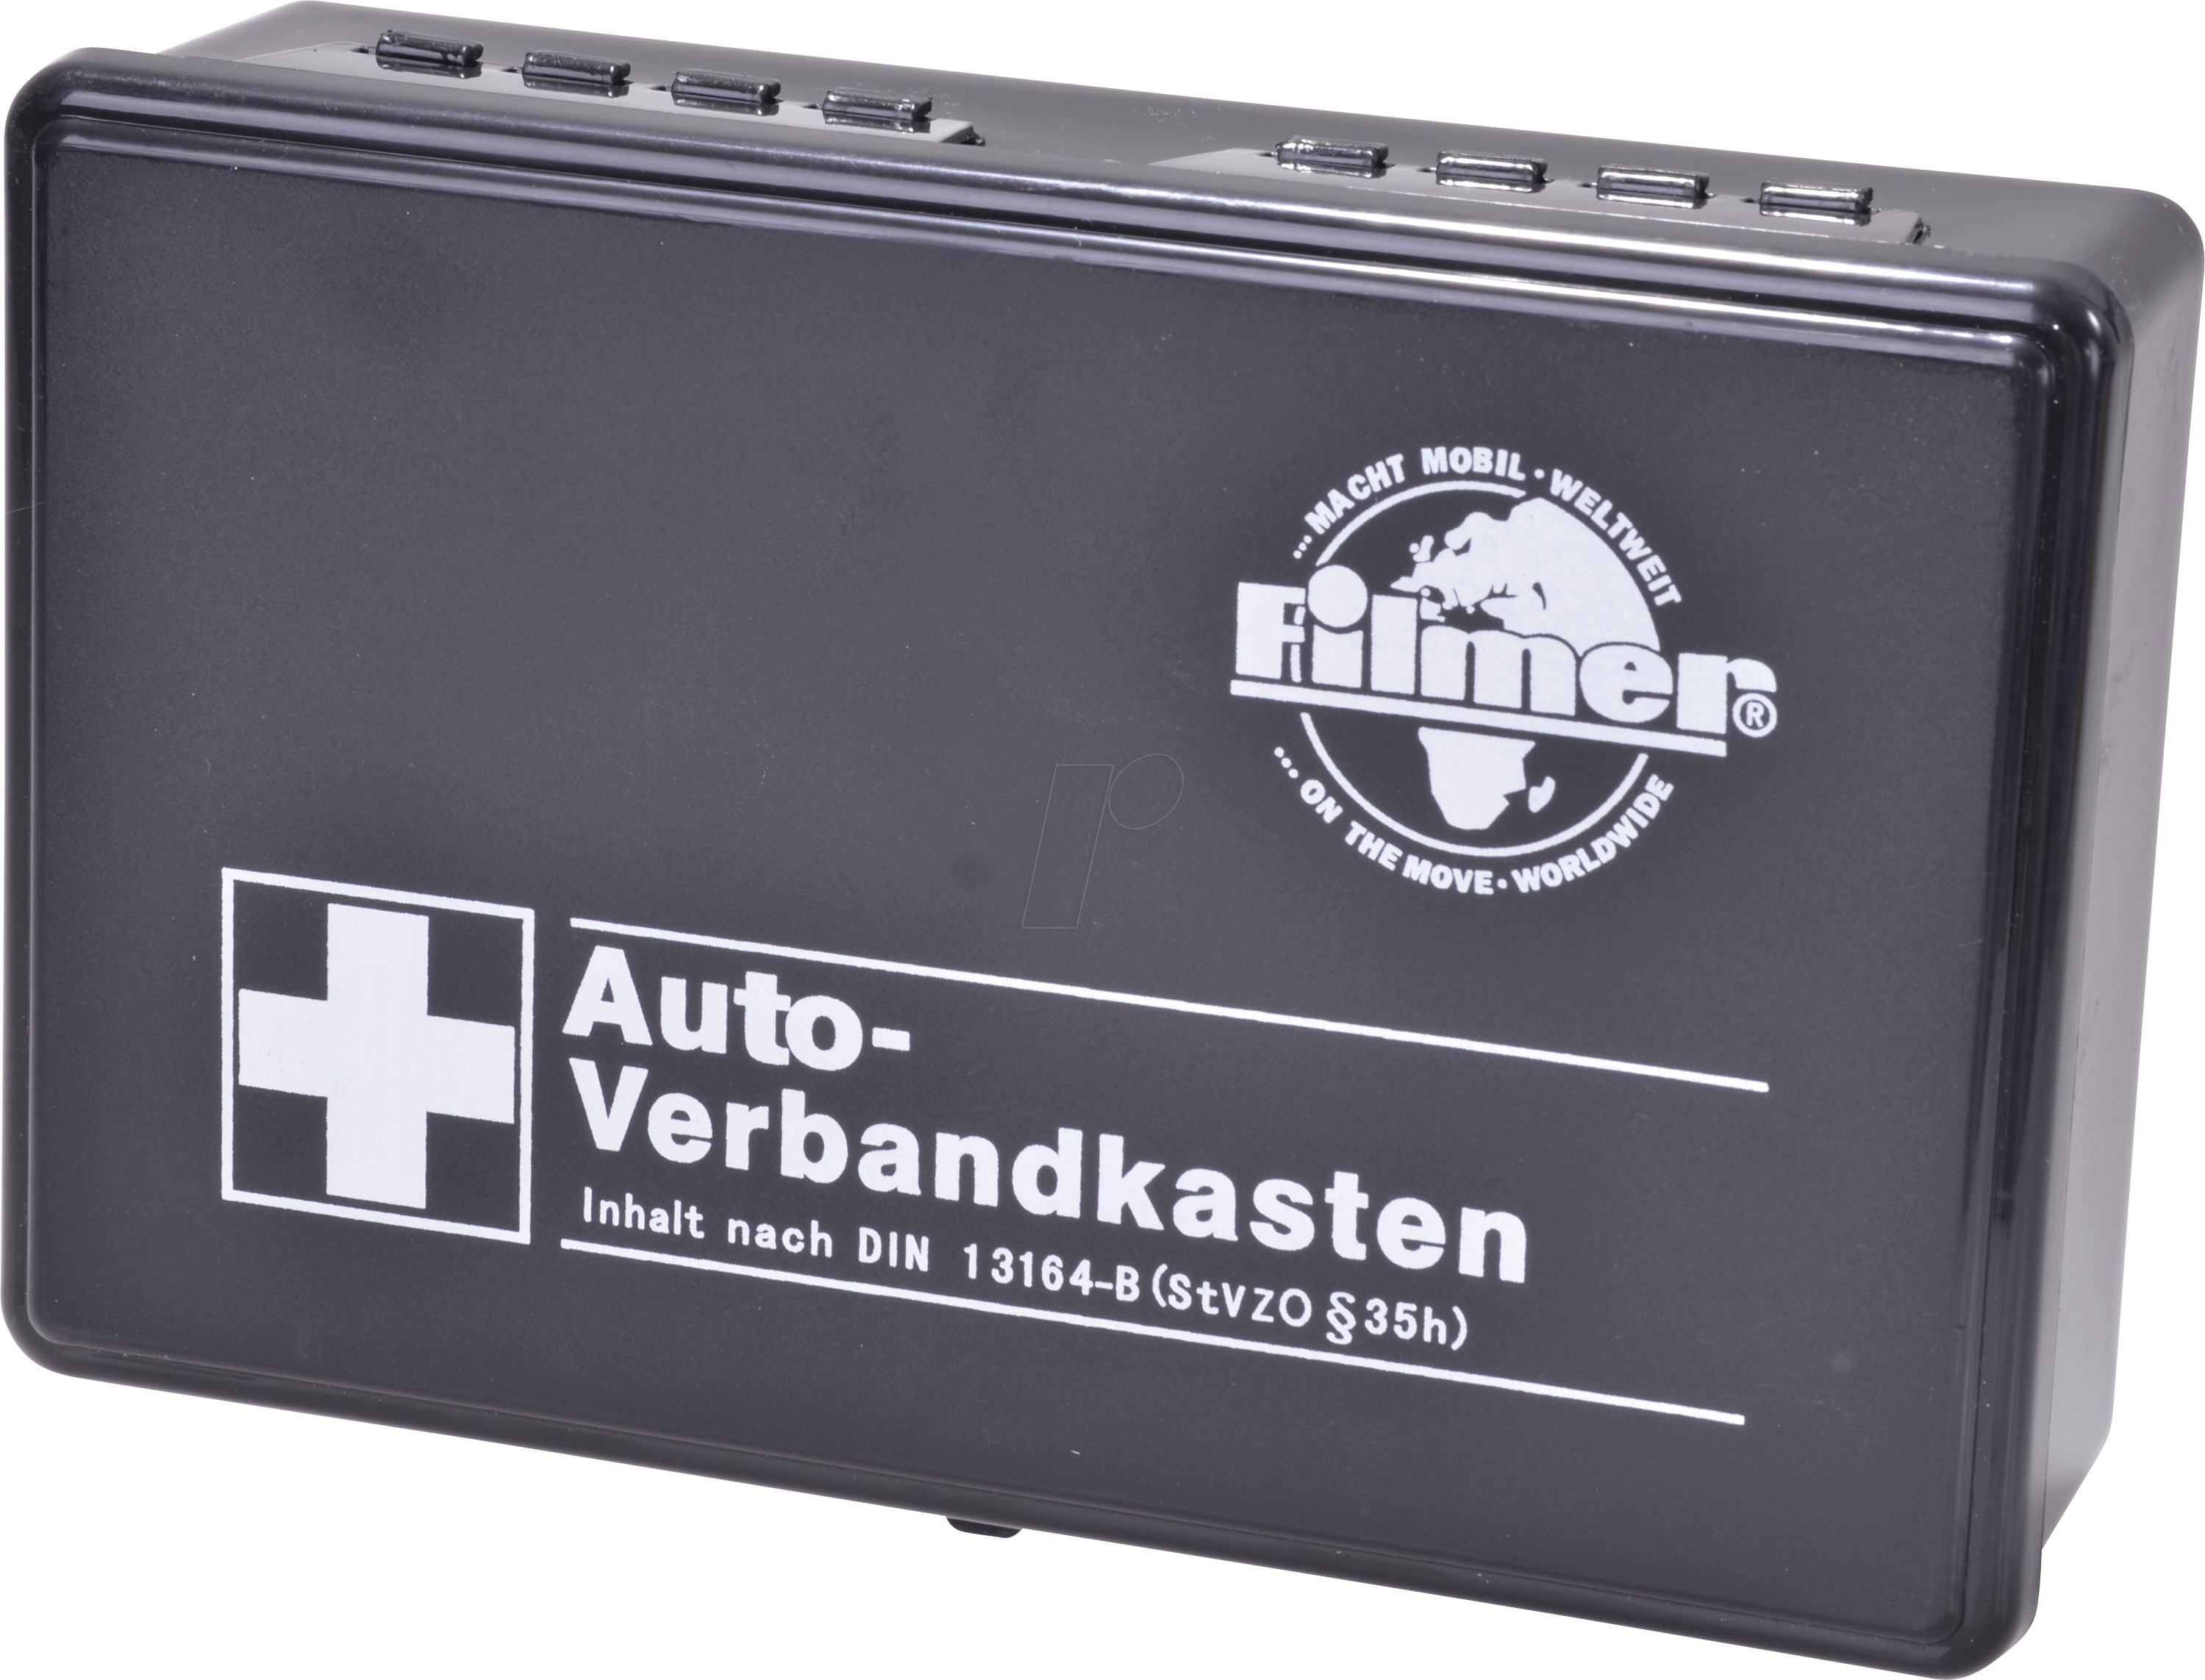 Vehicle - first aid kit, DIN 13164, box